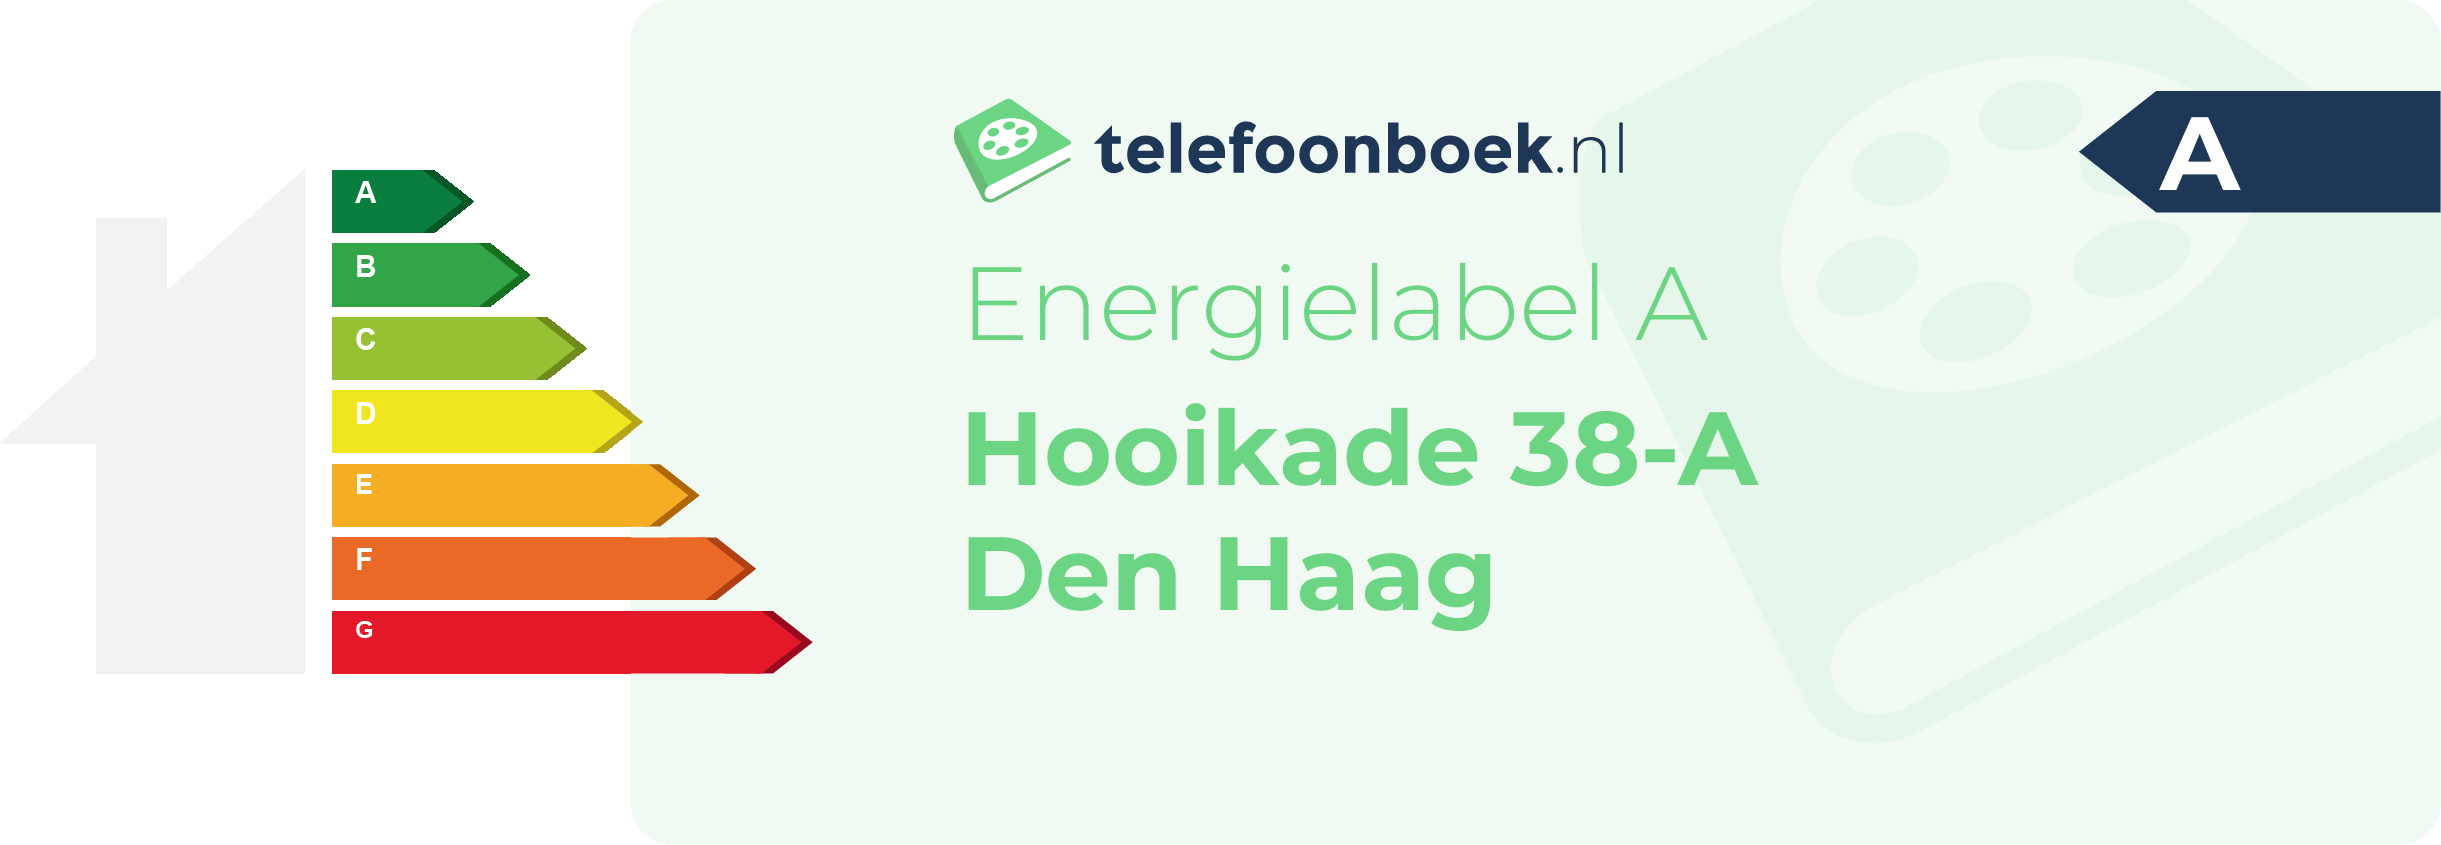 Energielabel Hooikade 38-A Den Haag